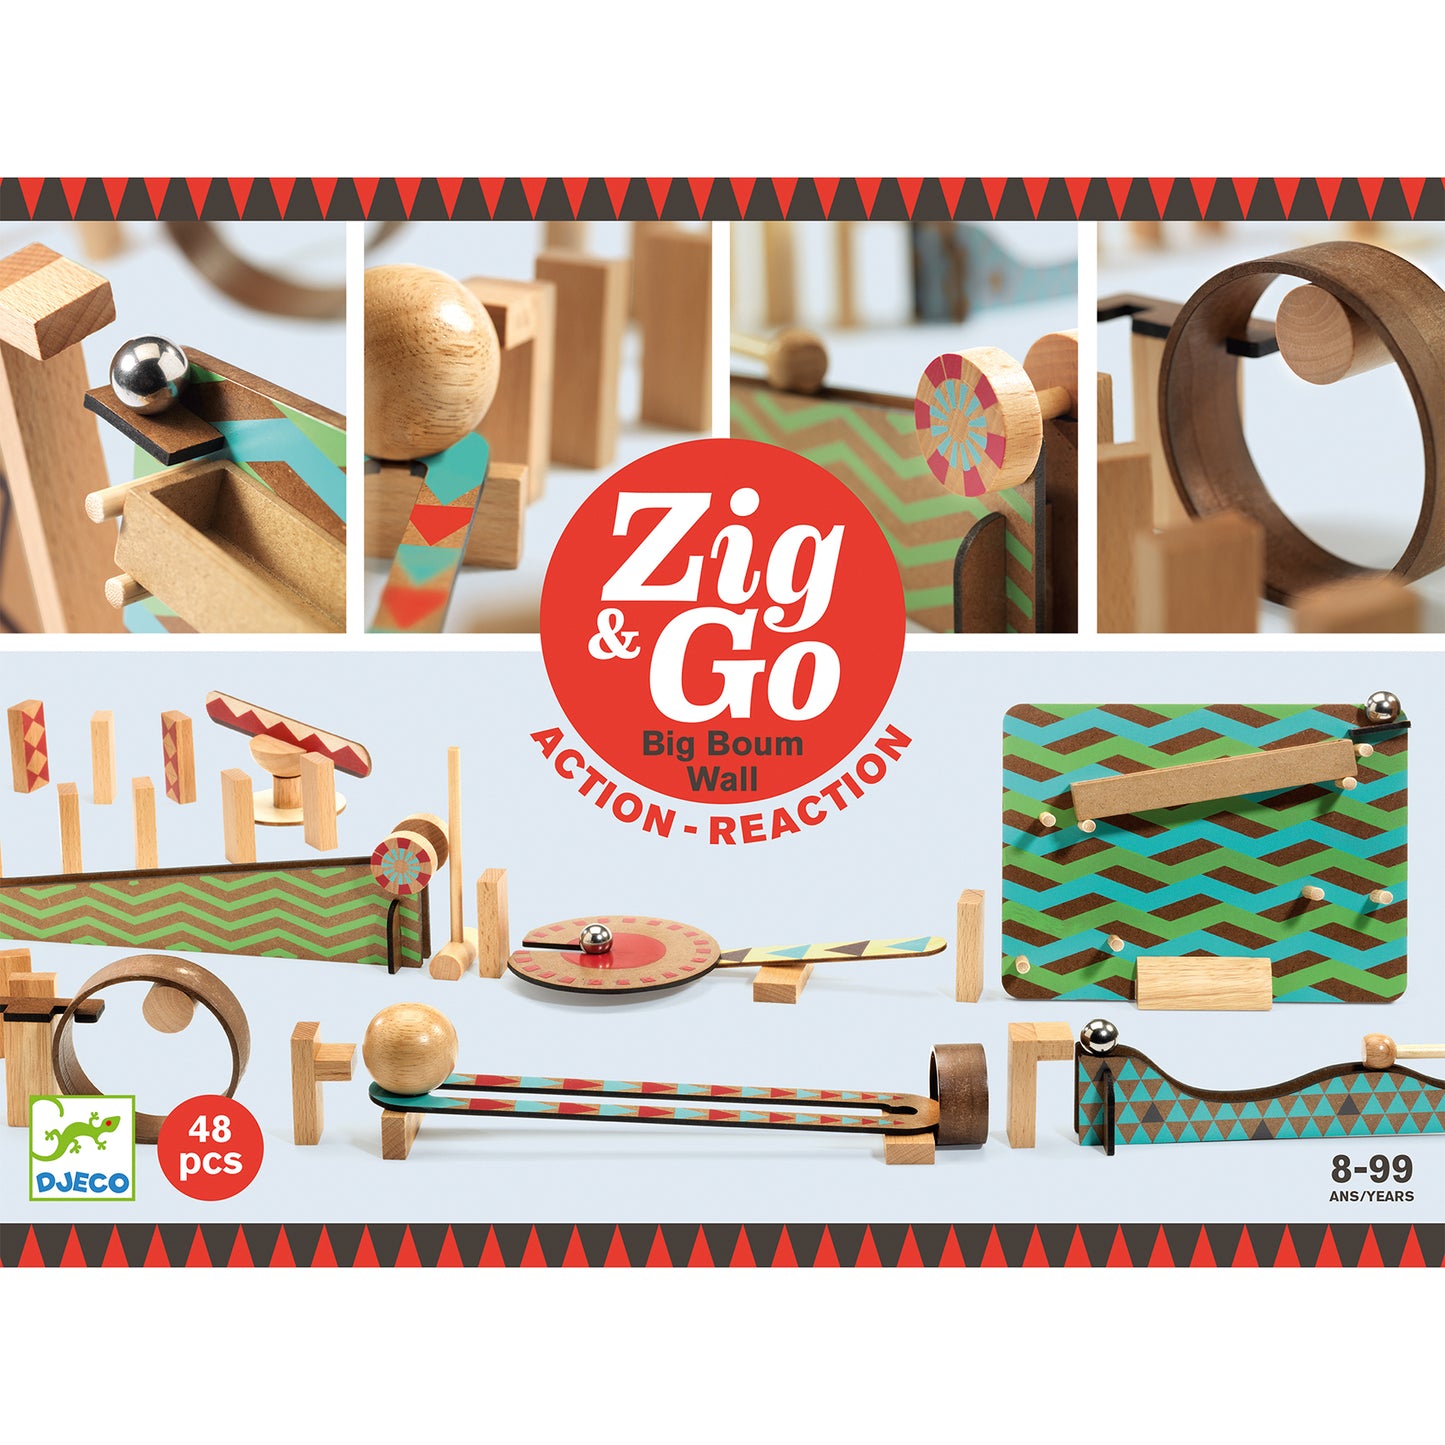 Zig & Go - Azione reazione 48 pezzi